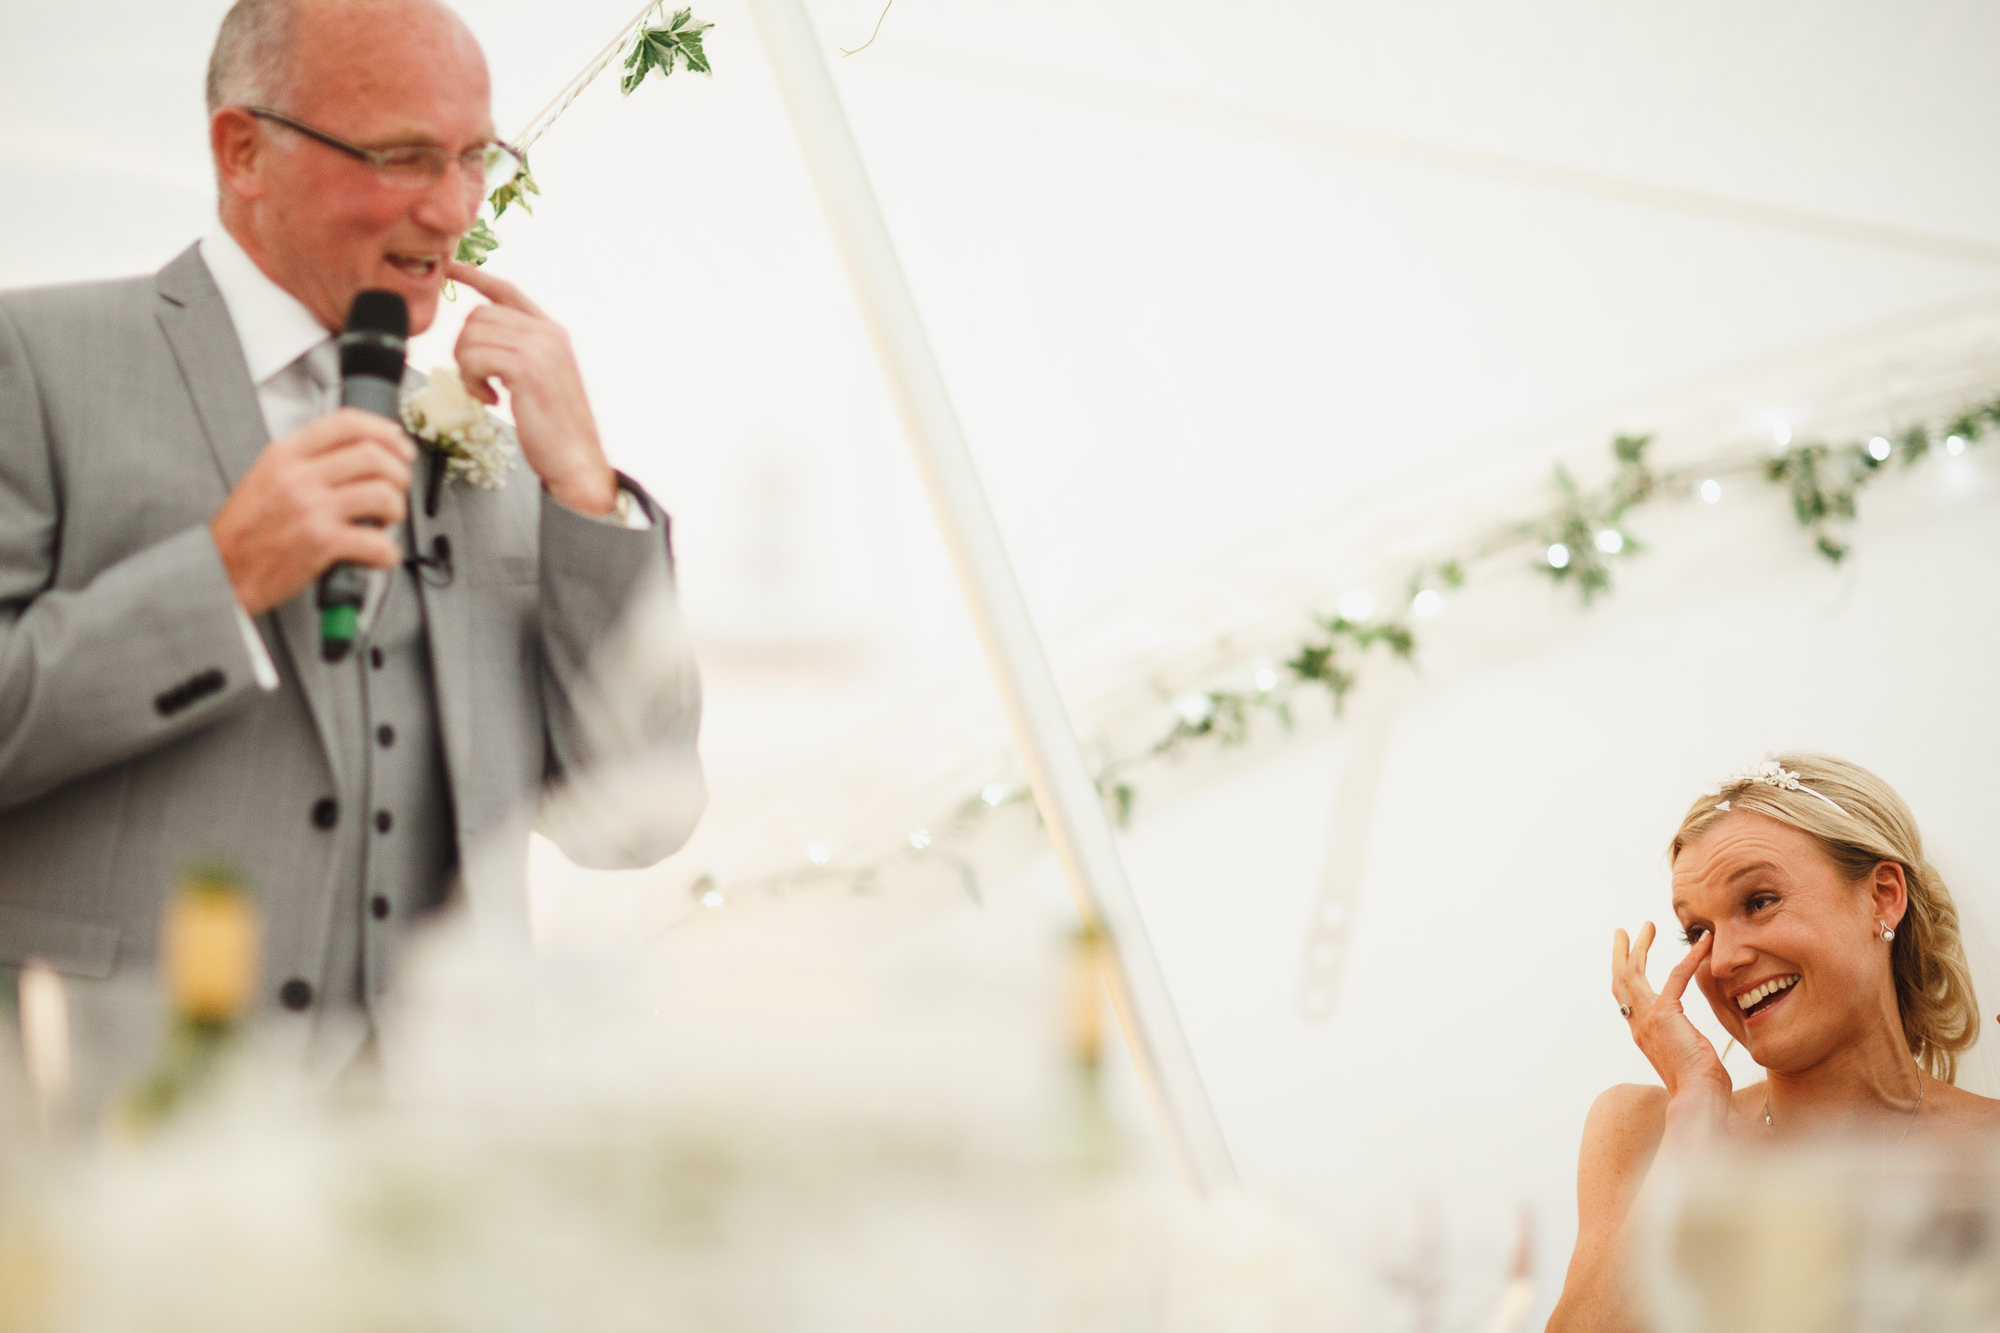 Best cheshire wedding photography 2014